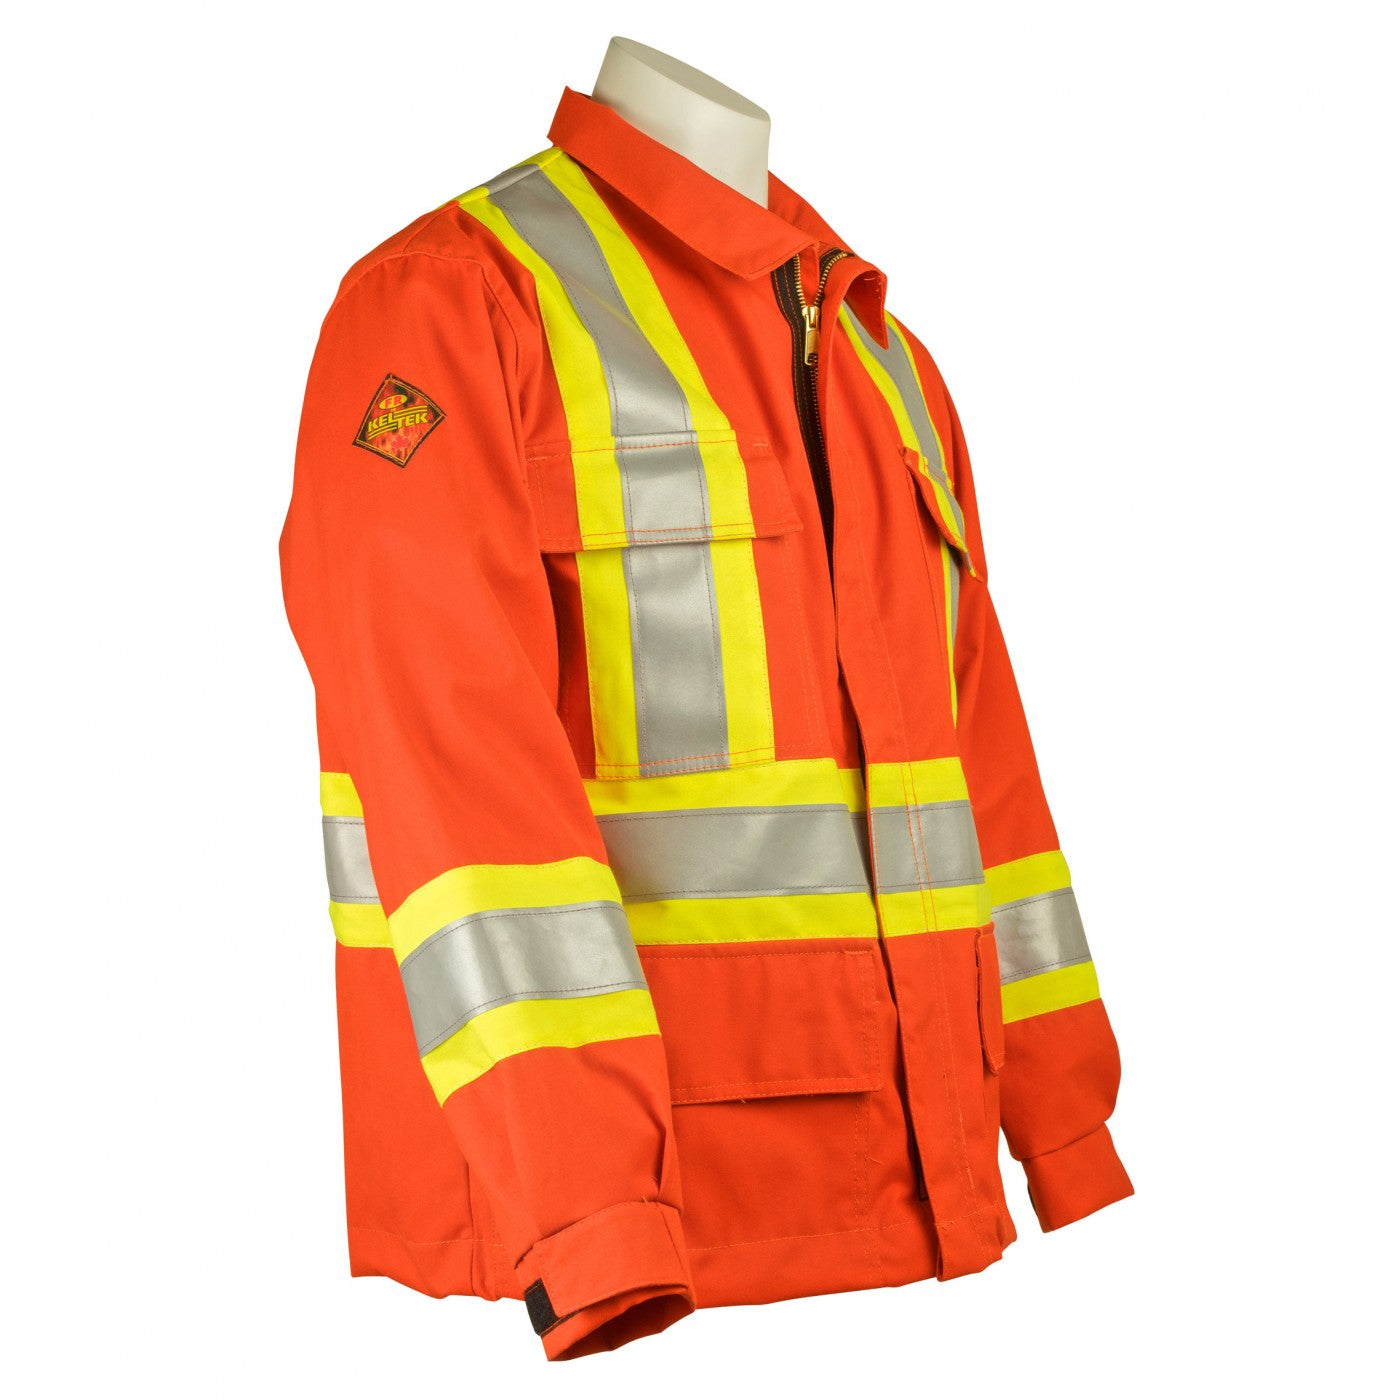 KELTEK 383s Men's Orange CSA Flame Resistant Hi-Vis Unlined Shirt Jacket | S-5XL (HRC 2)